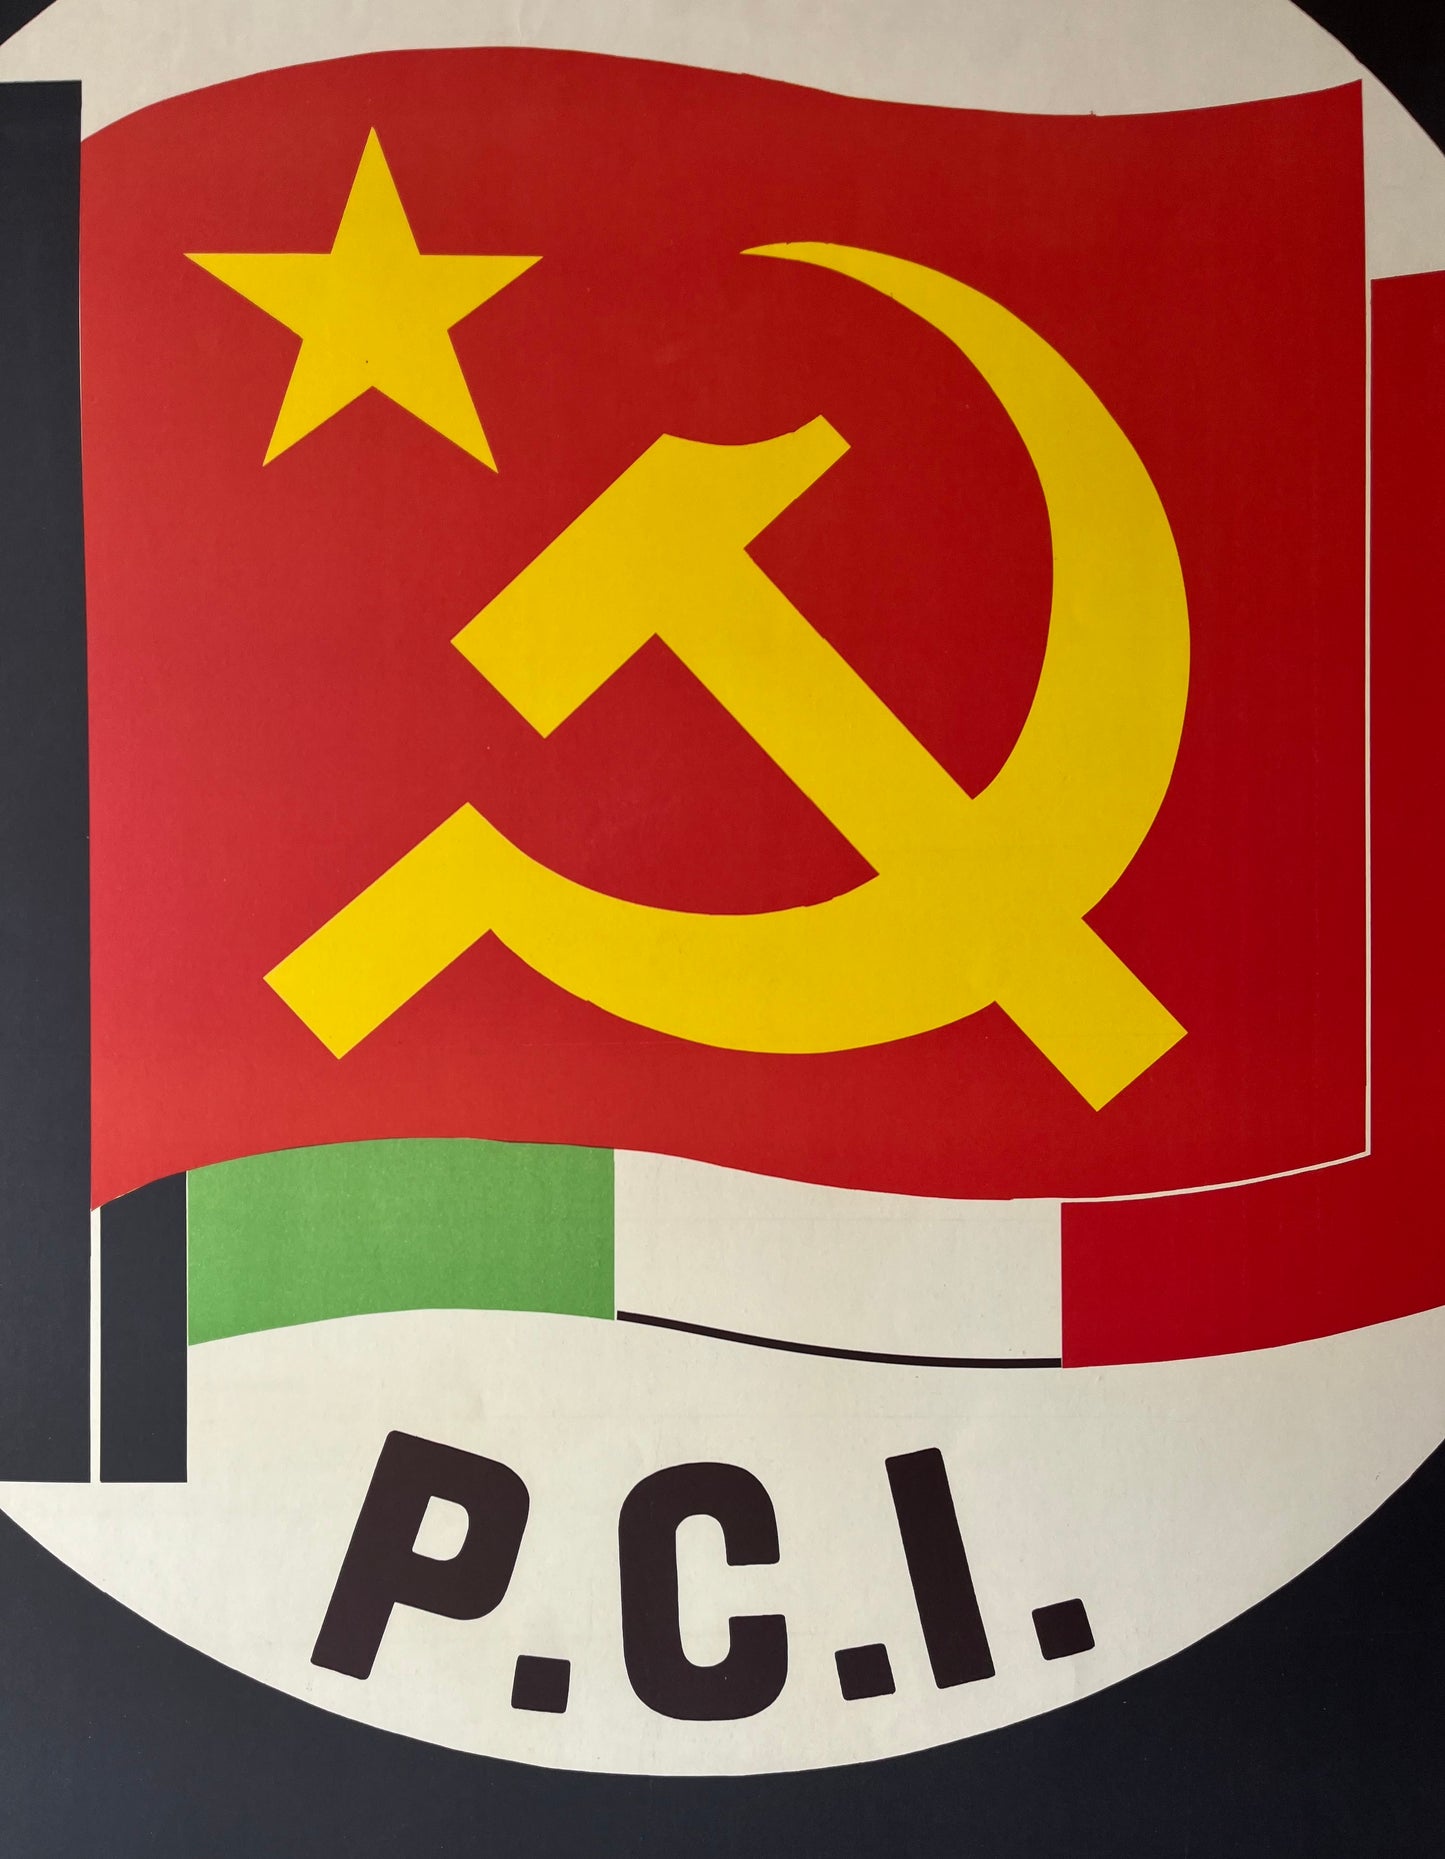 Vota Comunista by P.C.I.